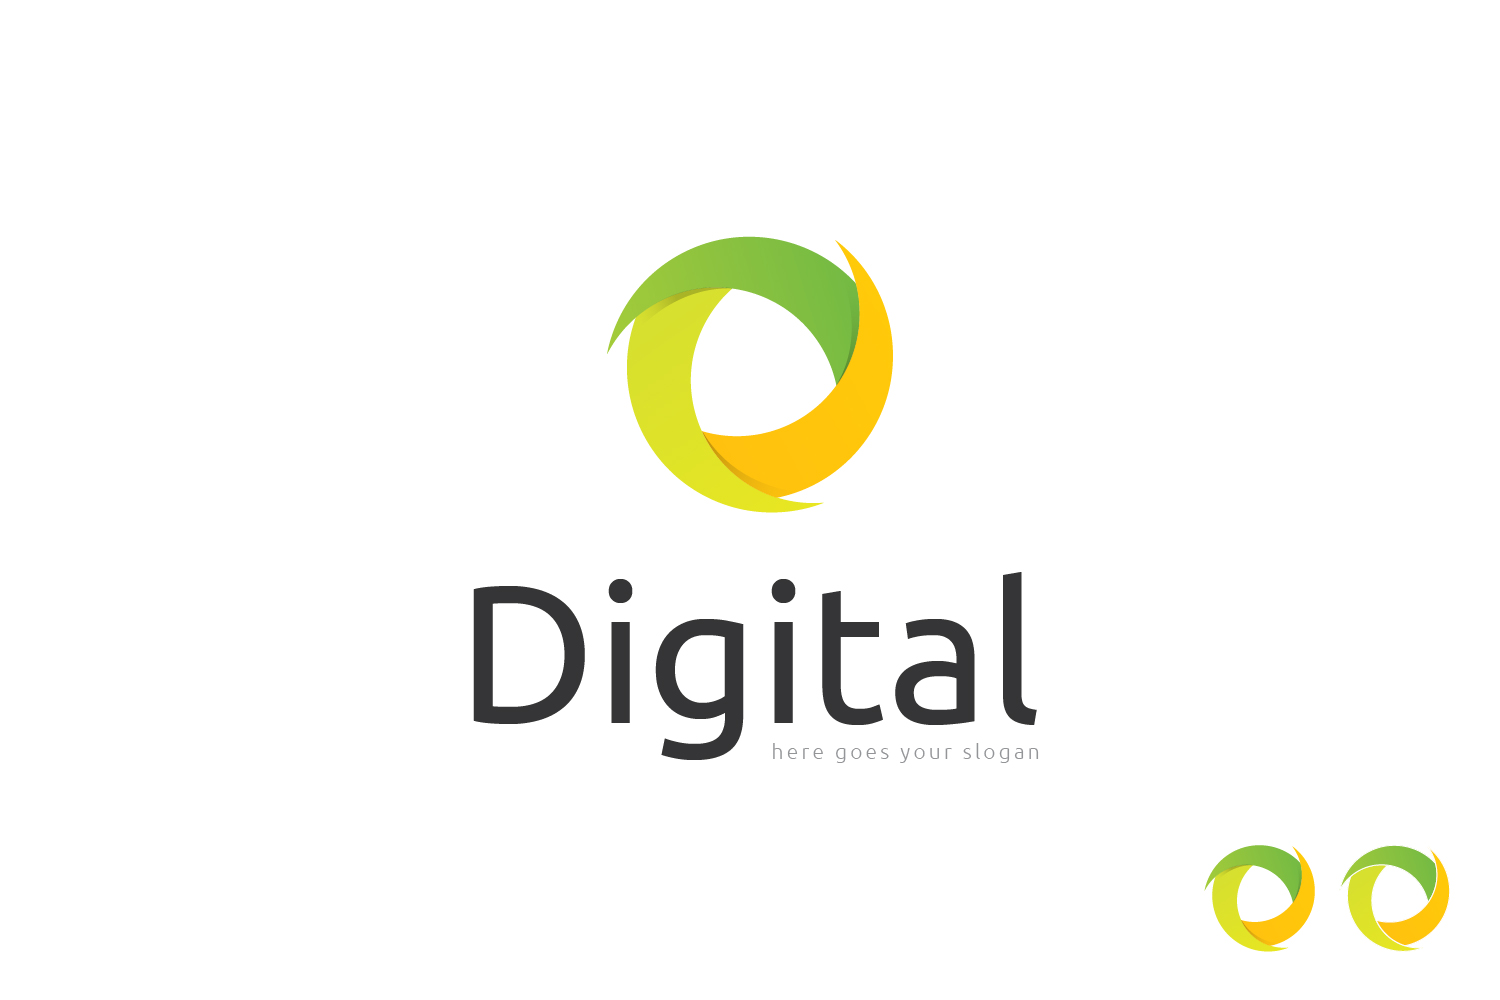  Digital  Logo  Logo  Templates on Creative Market